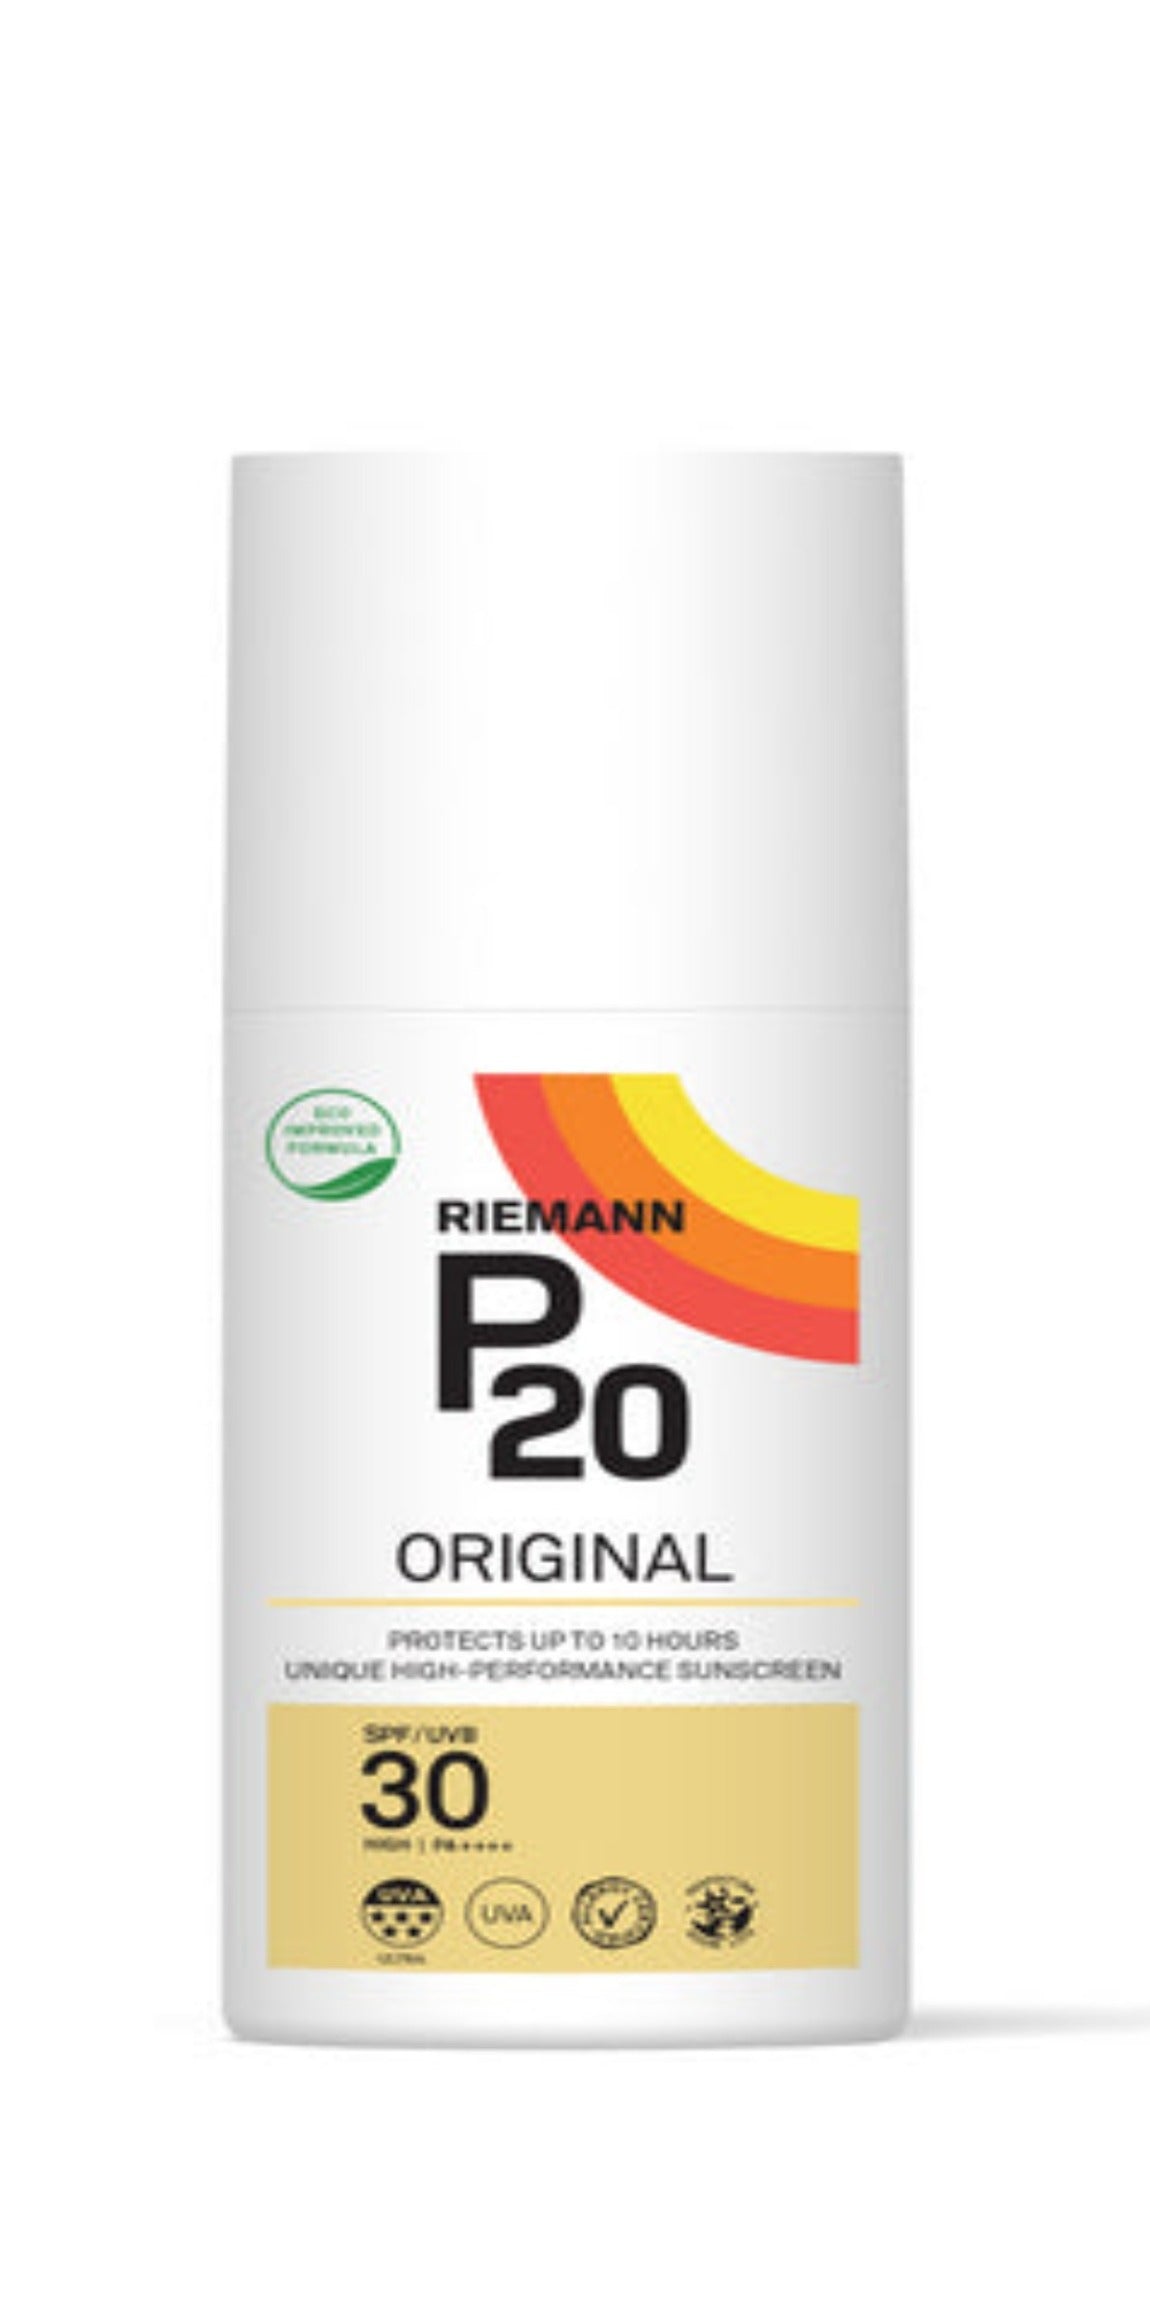 P20 Original Spray SPF30 175ml-bottle